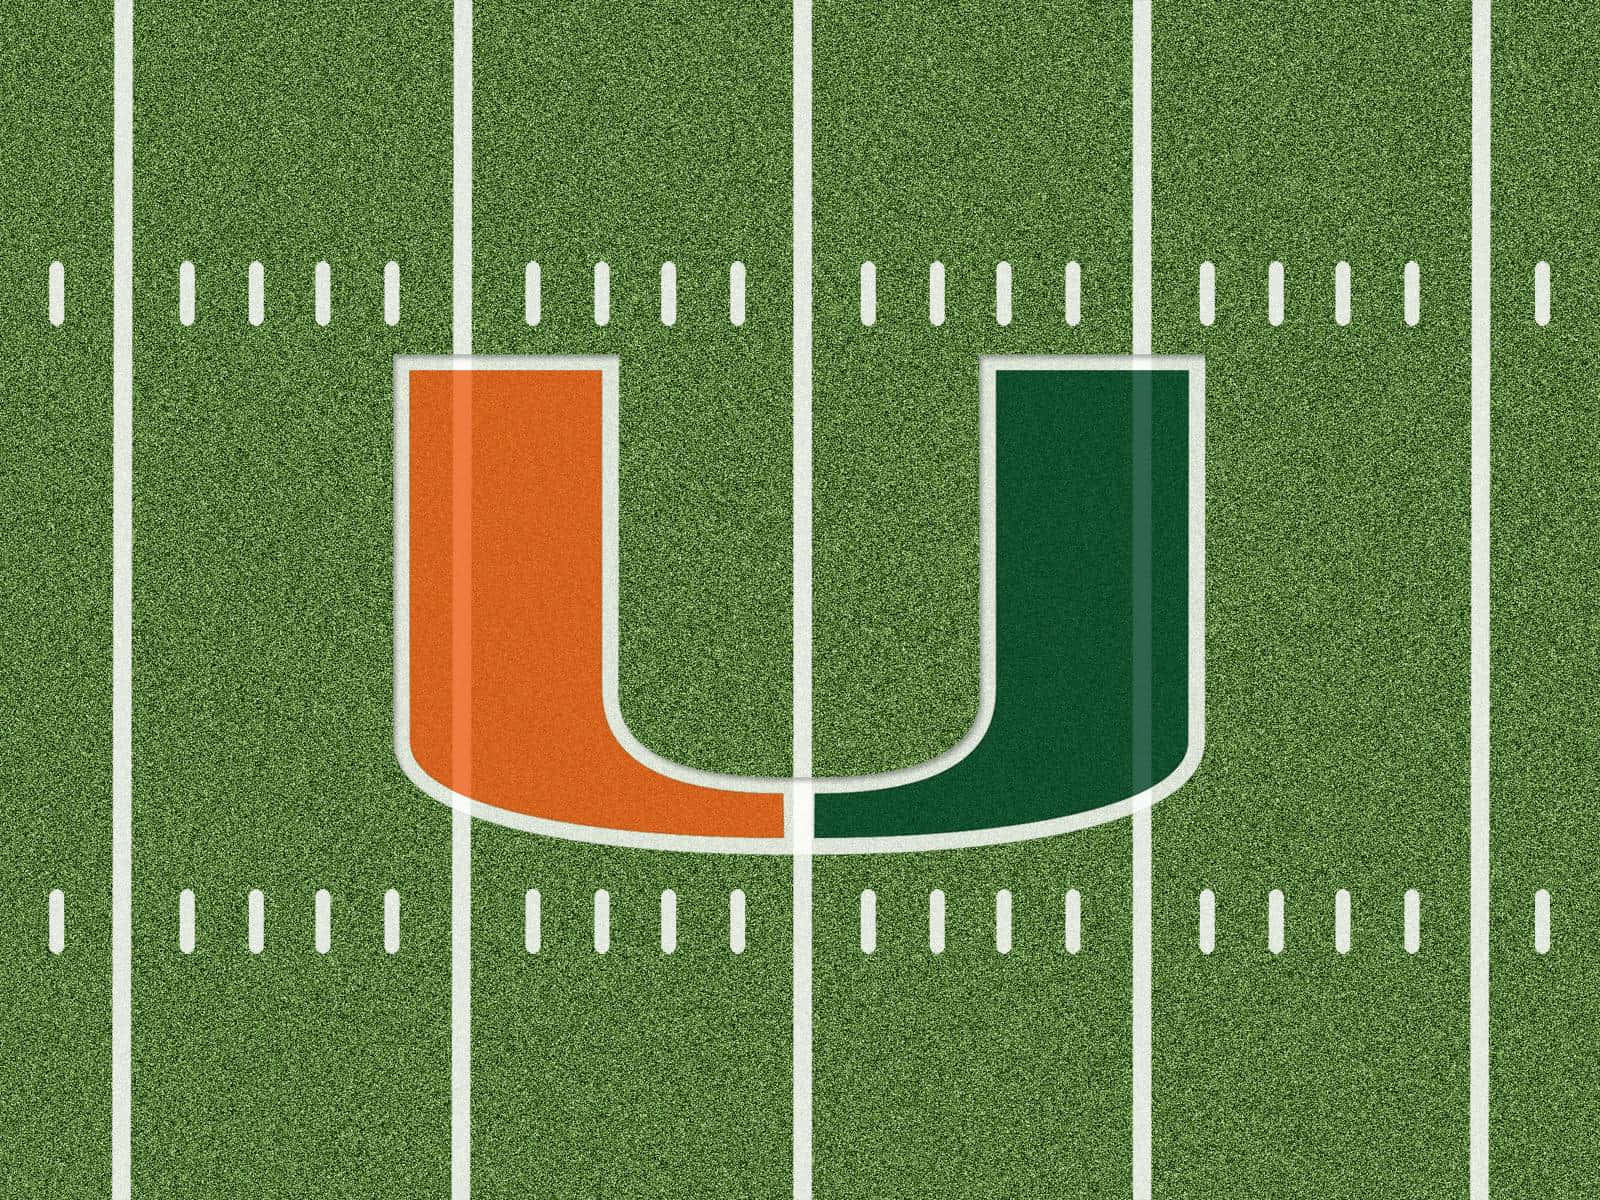 Miami Hurricanes Logo Football Field Wallpaper